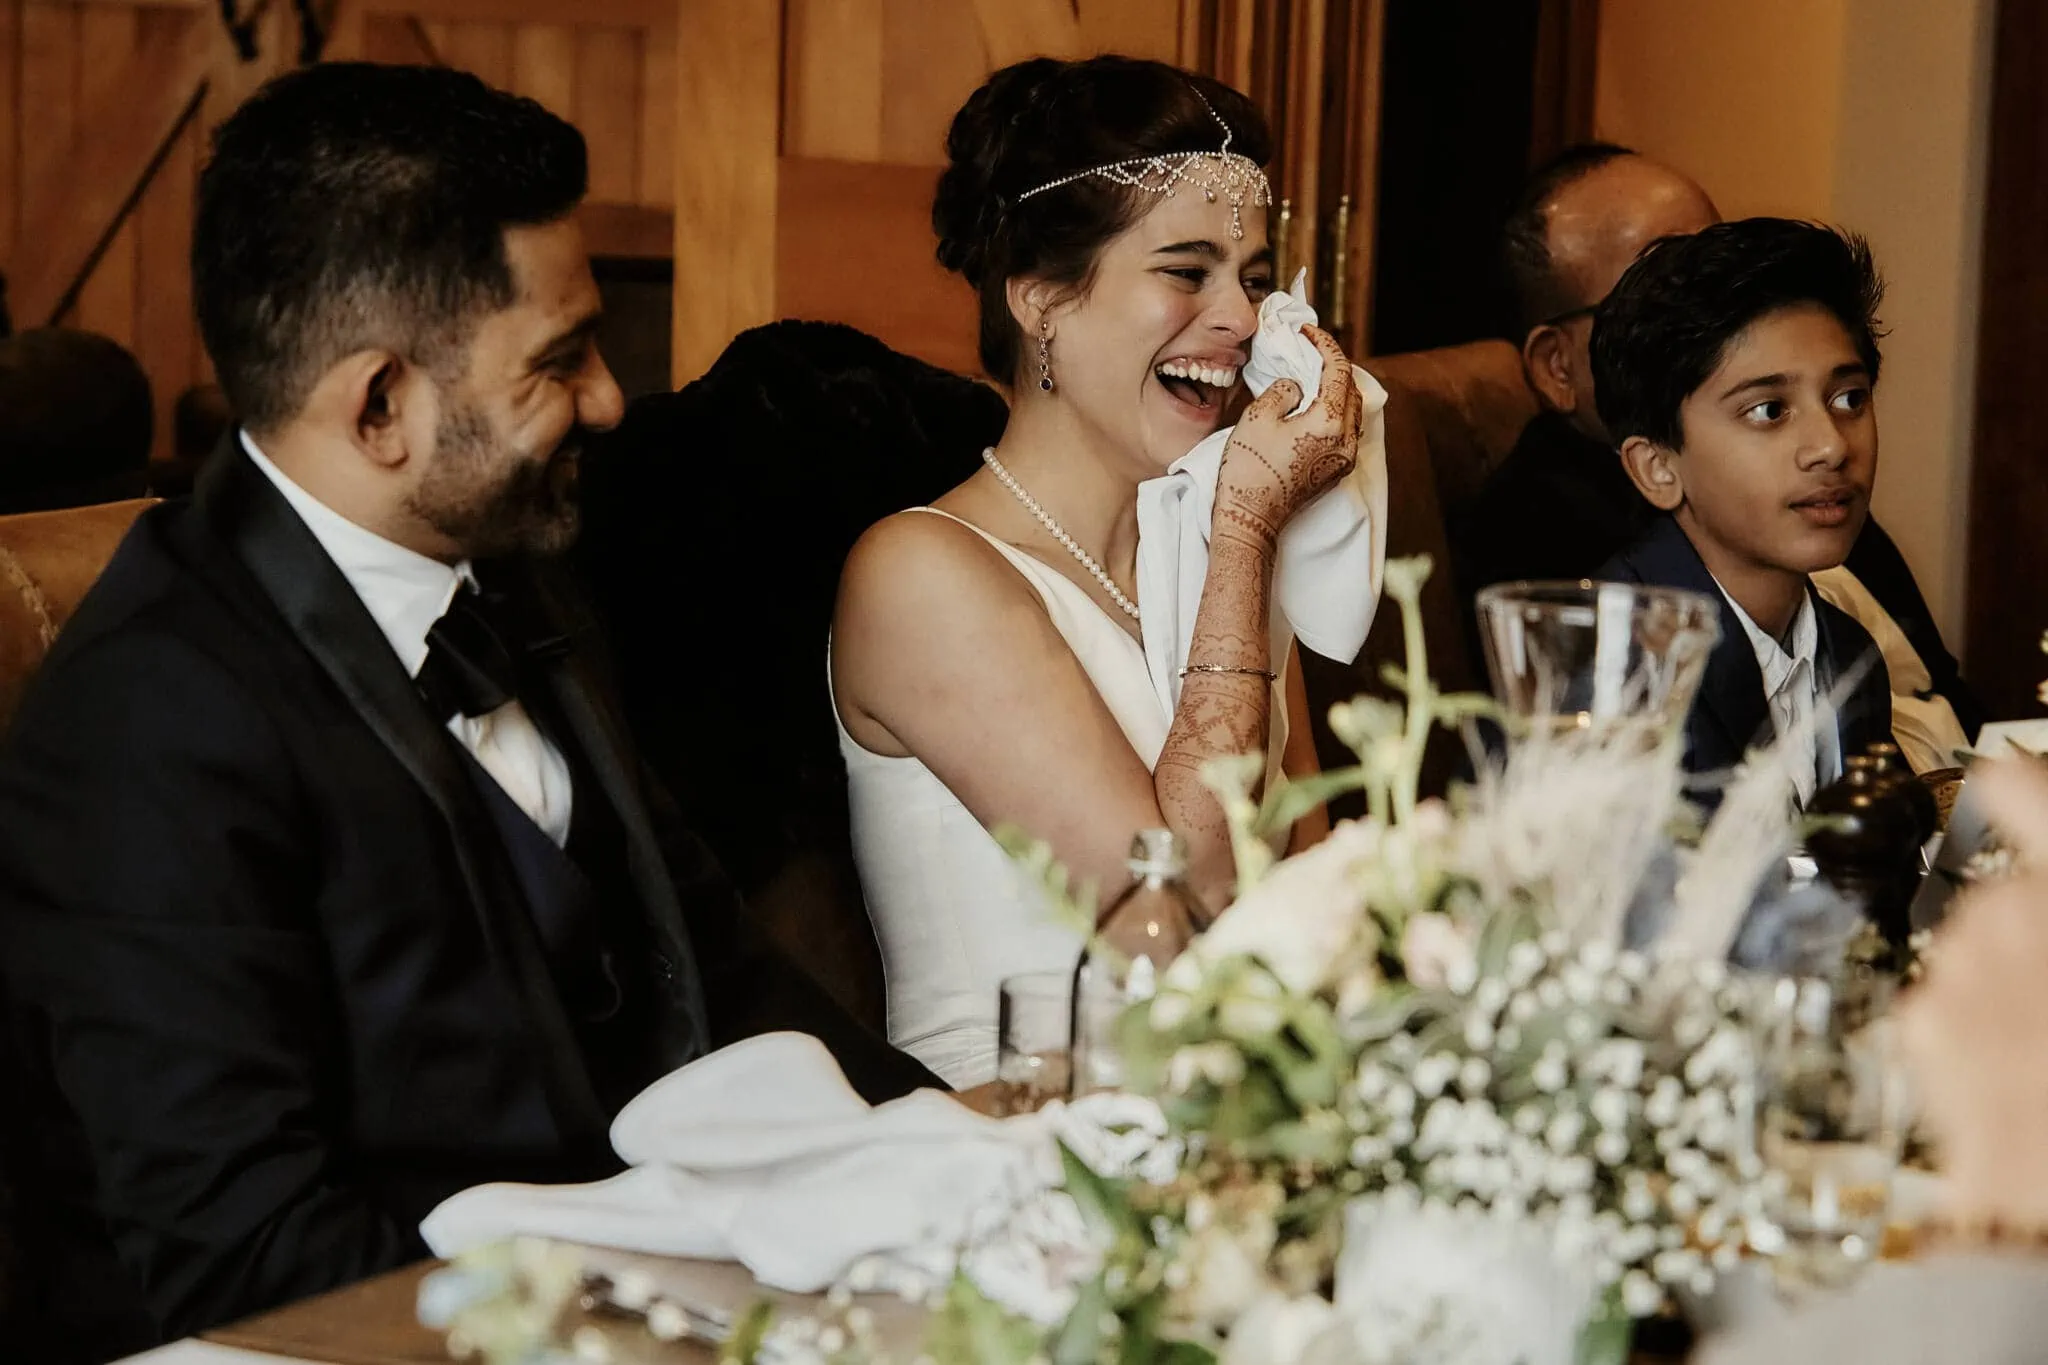 Queenstown New Zealand Elopement Wedding Photographer - Wasim and Yumn laughing at their Queenstown Islamic Wedding reception.